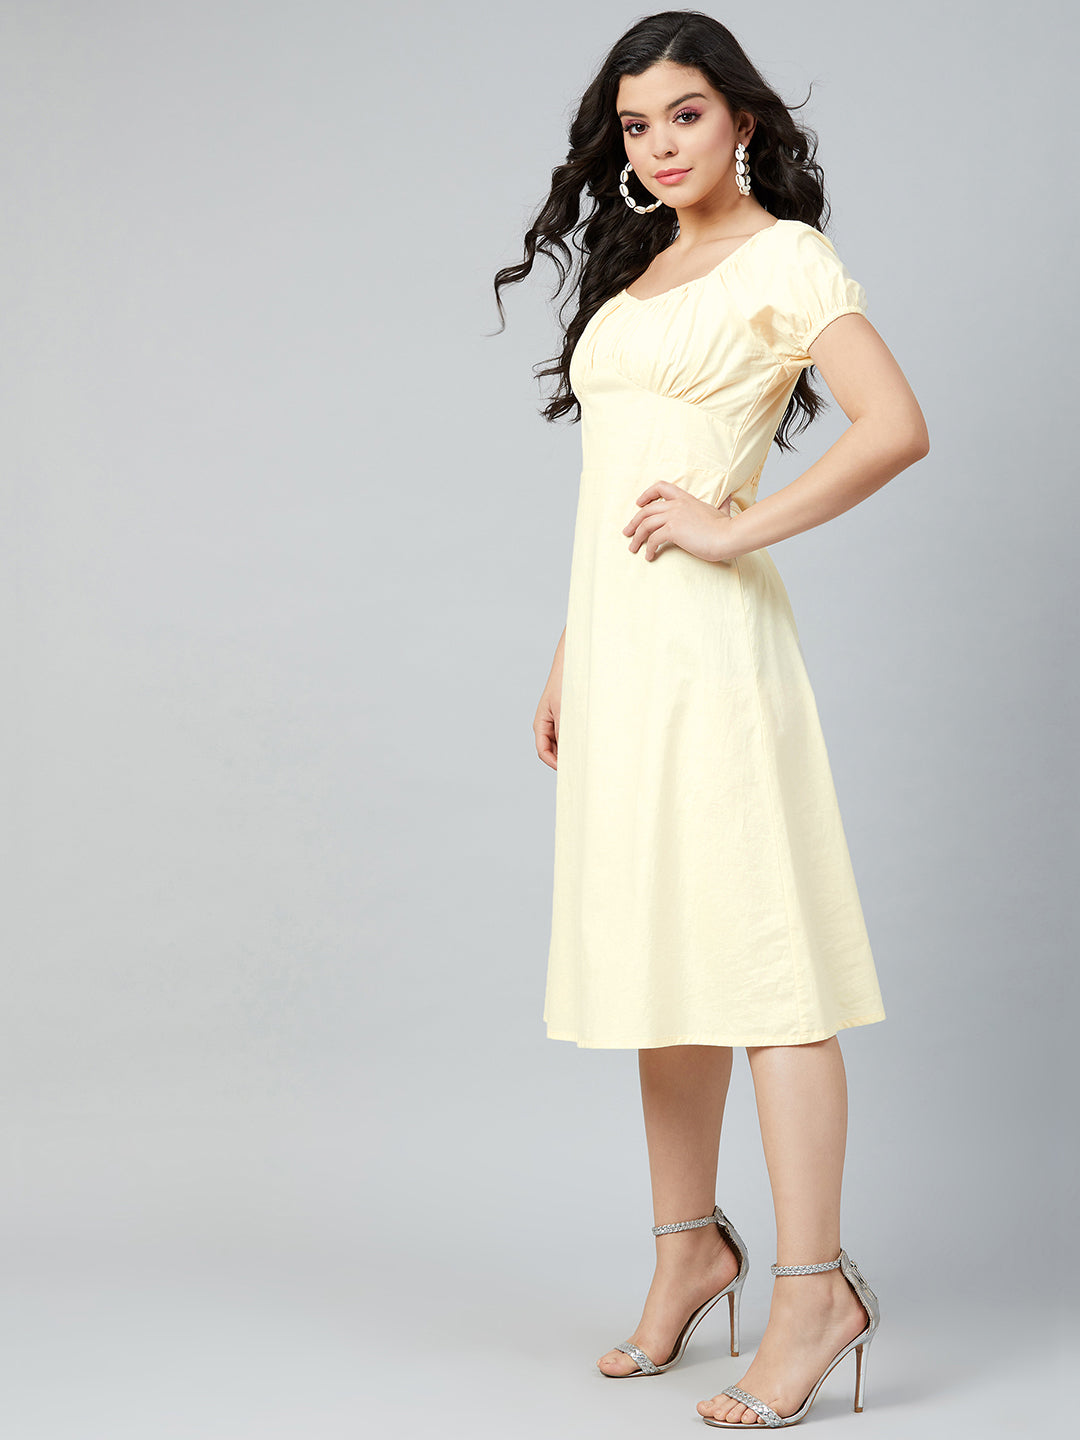 Athena Women Yellow Solid Cotton A-Line Dress with Gathers - Athena Lifestyle